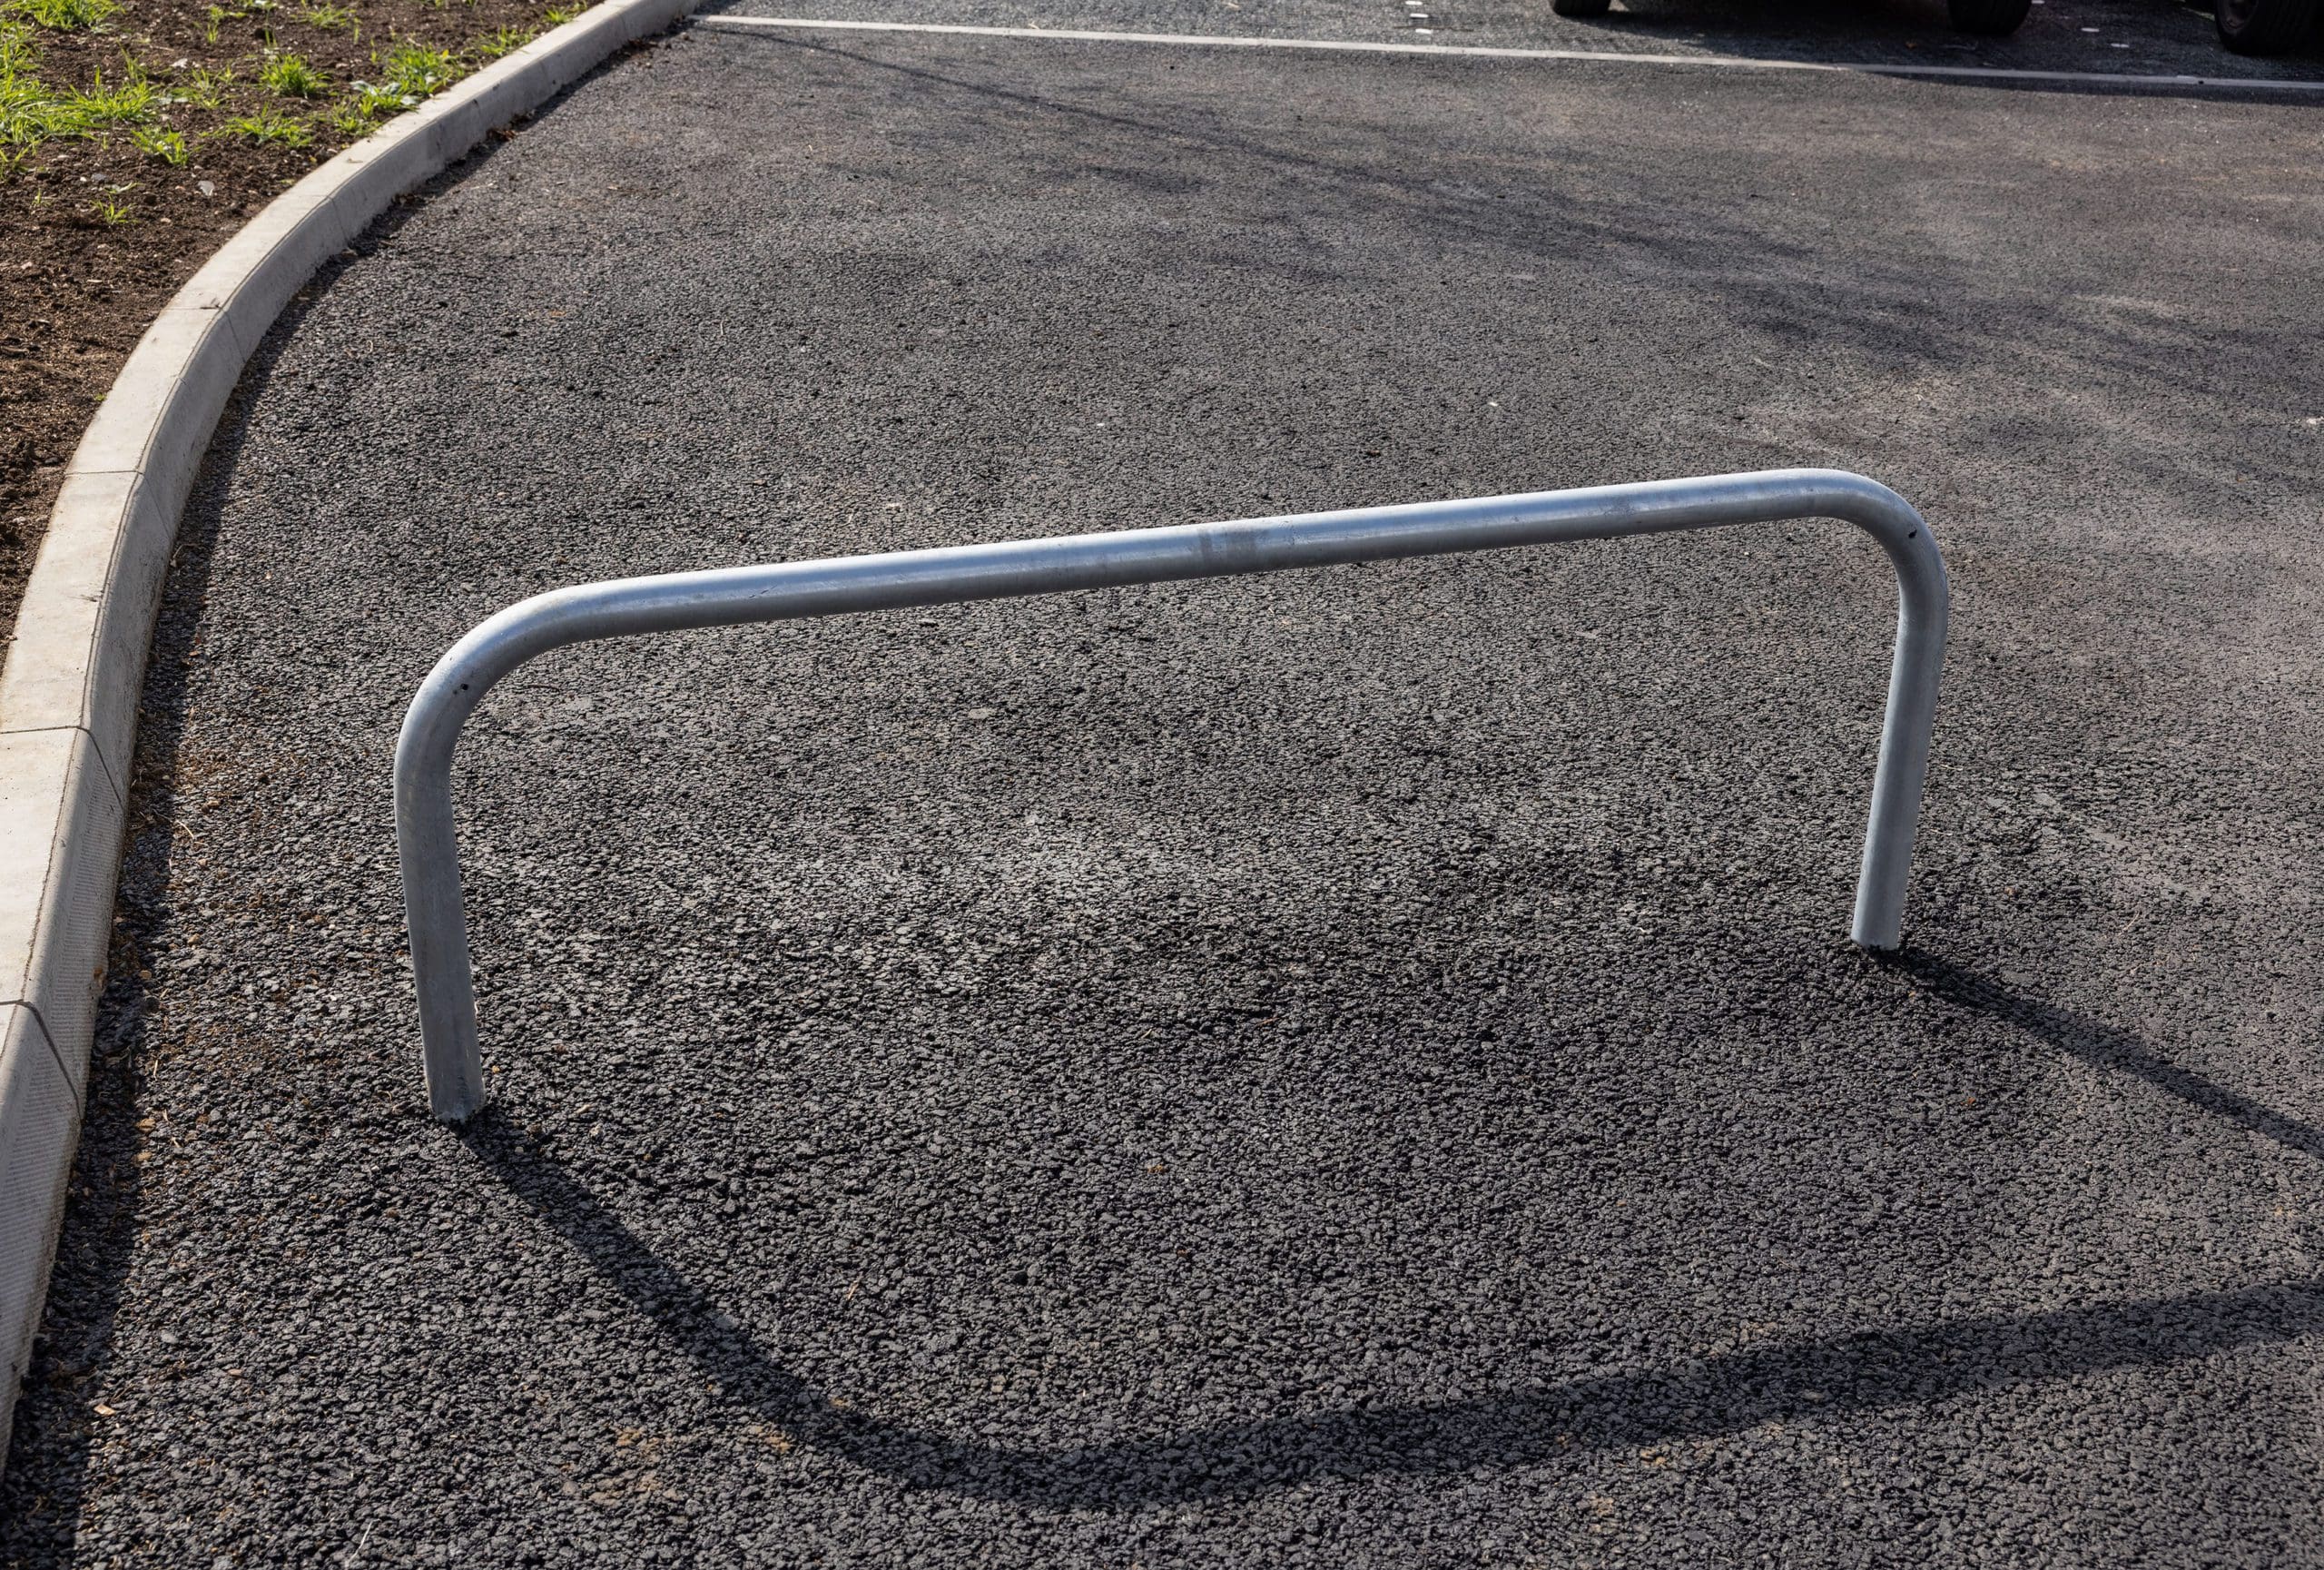 Exterior metal curved rectangular parking barrier